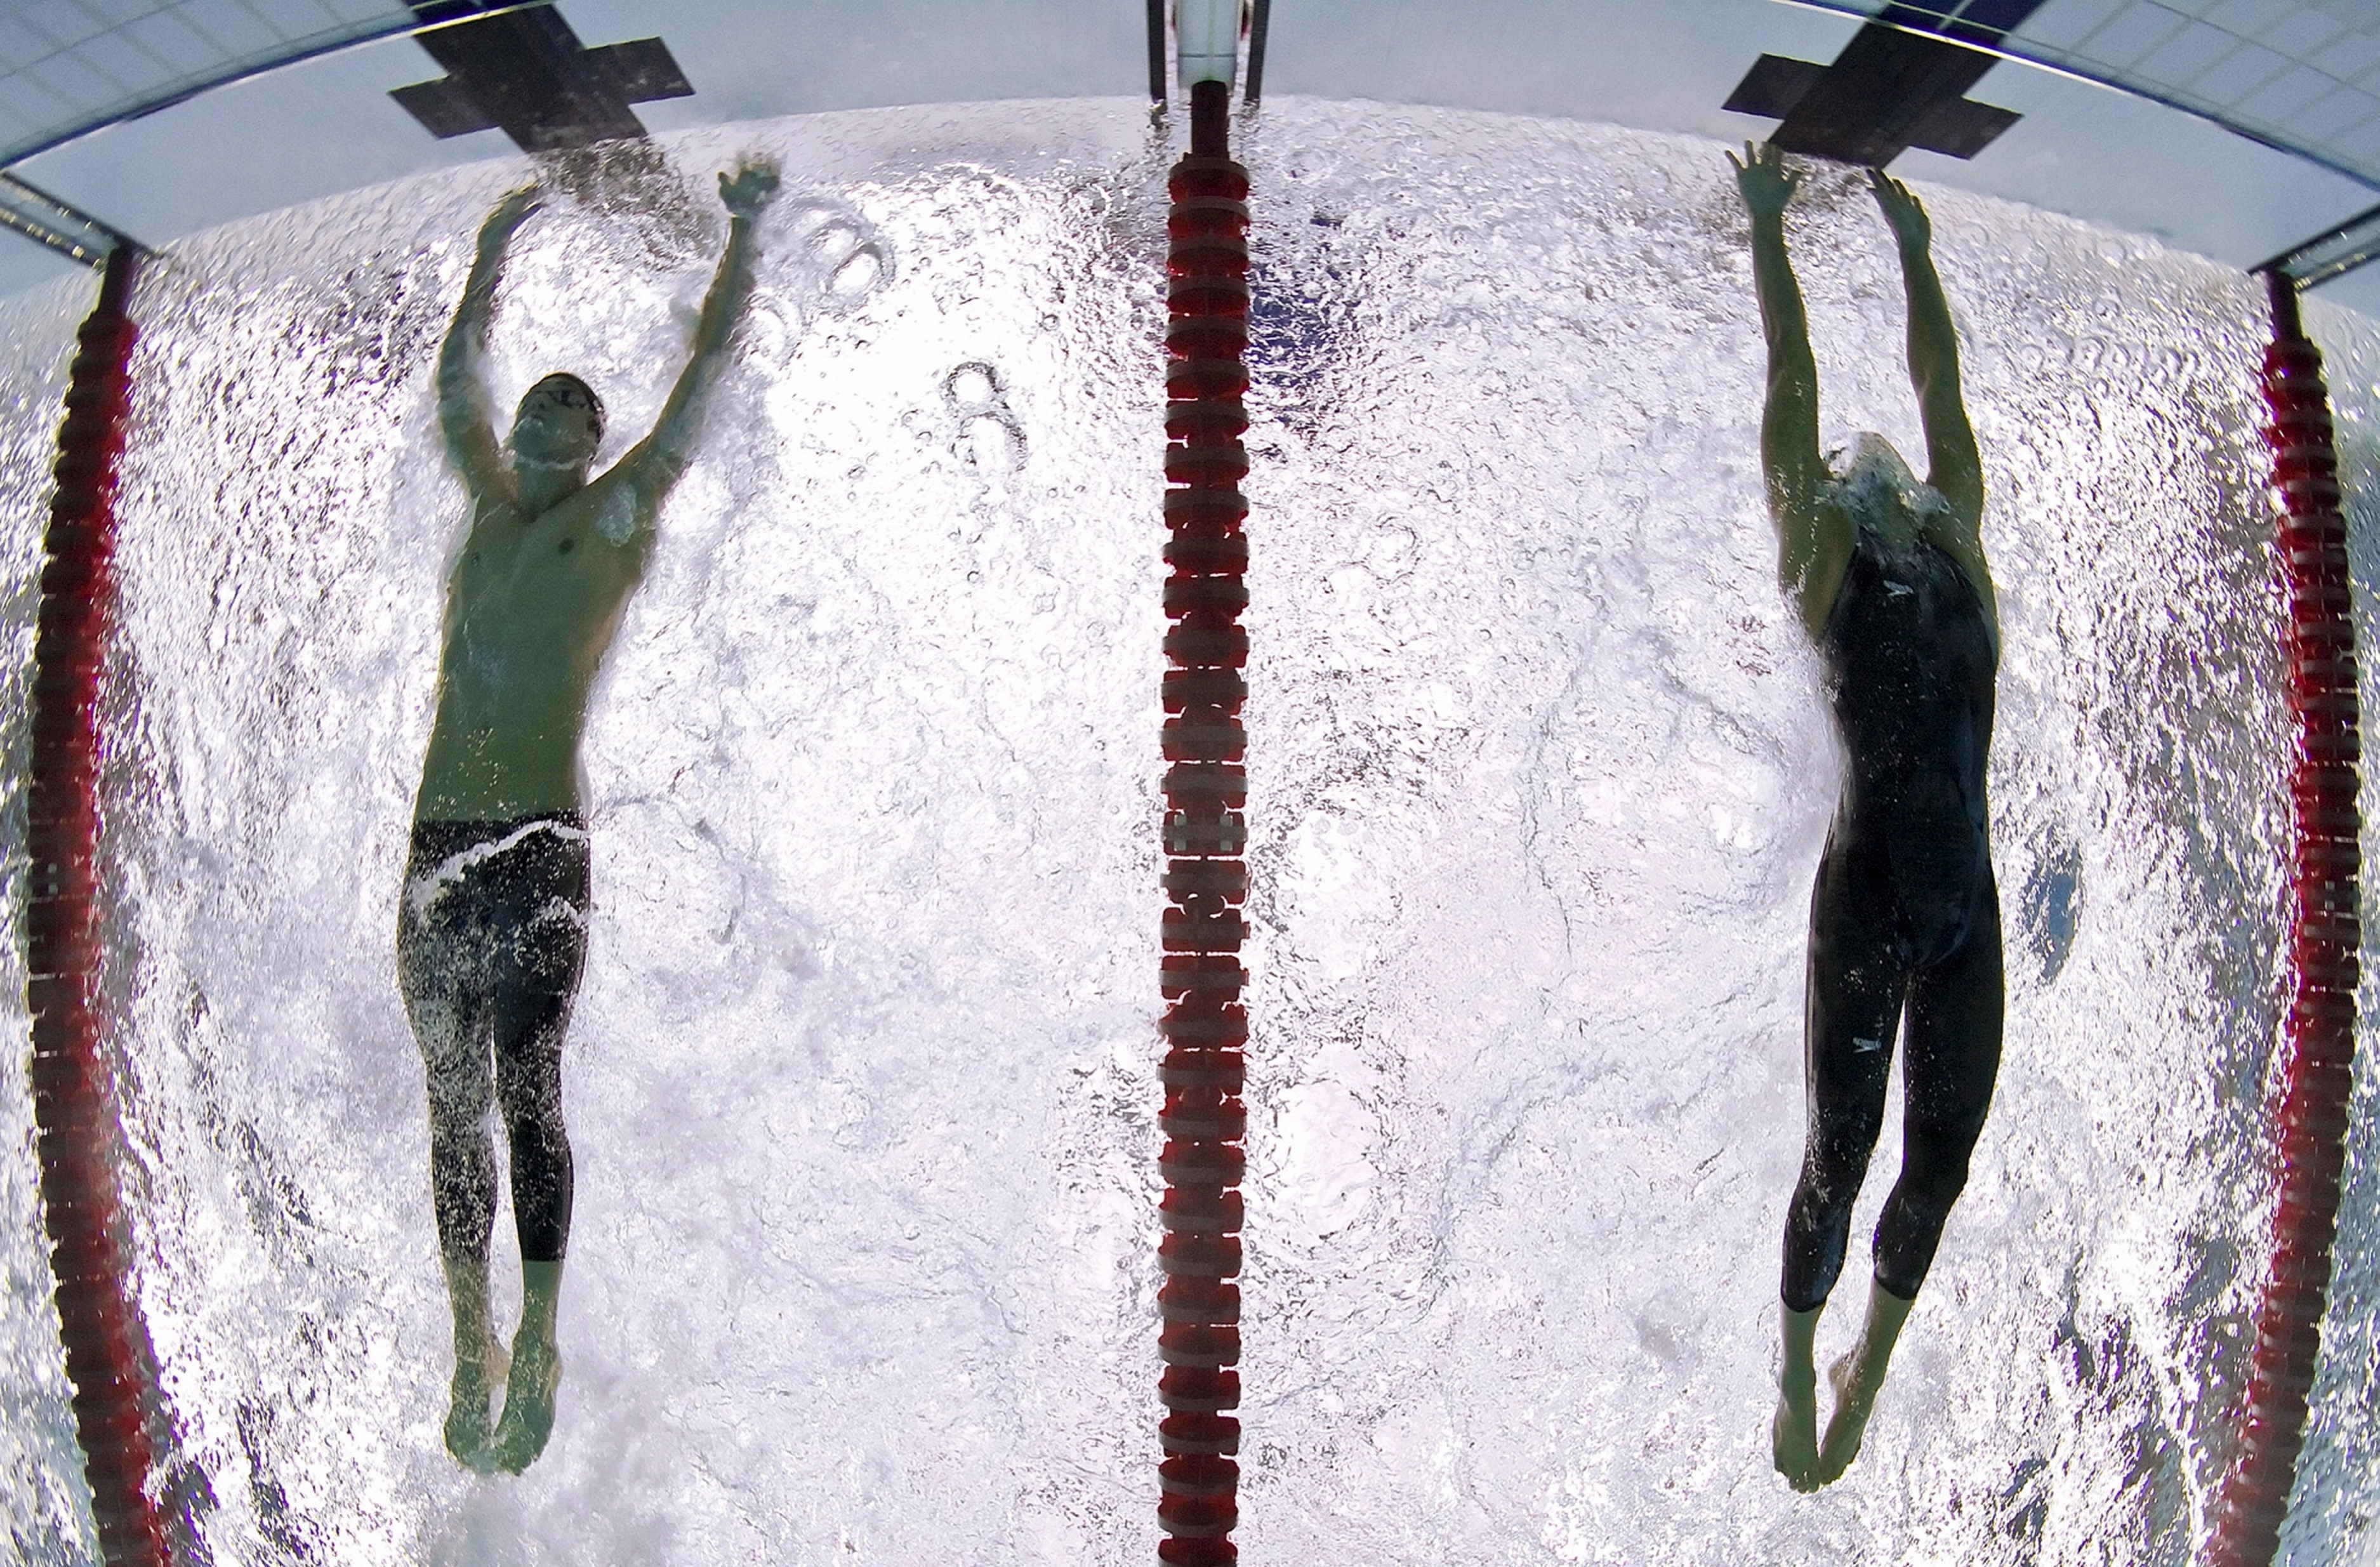 Американский пловец Майкл Фелпс опережает сербского пловца Милорада Чавича на 0,01 секунды на финише дистанции 100 метров баттерфляем.